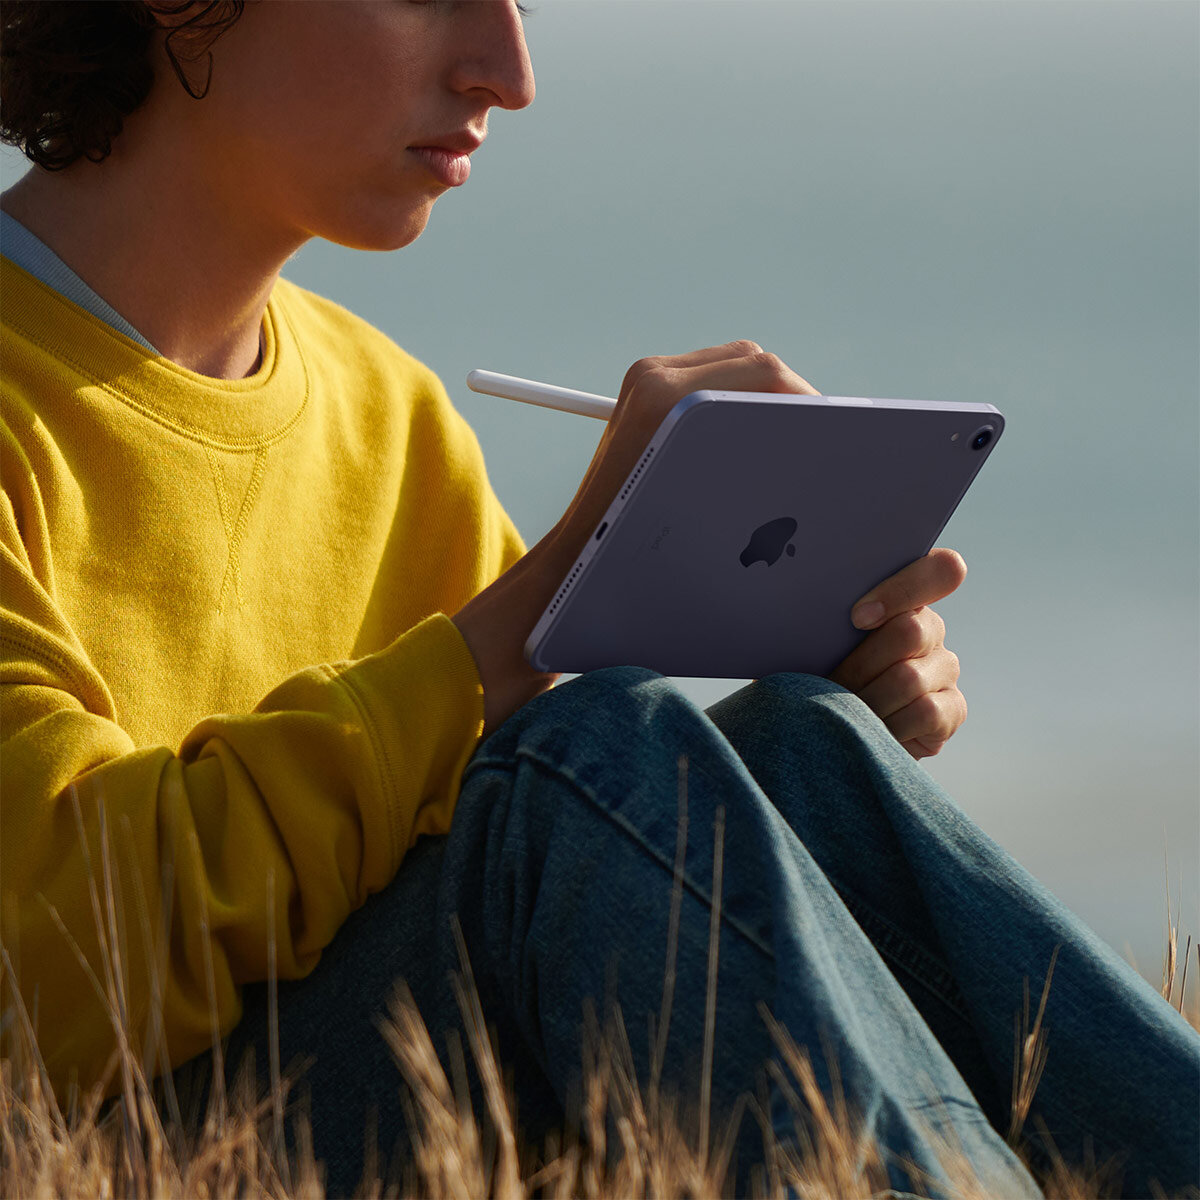 Buy Apple iPad mini 6th Gen, 8.3 Inch, WiFi + Cellular, 64GB in Pink, MLX43B/A at costco.co.uk